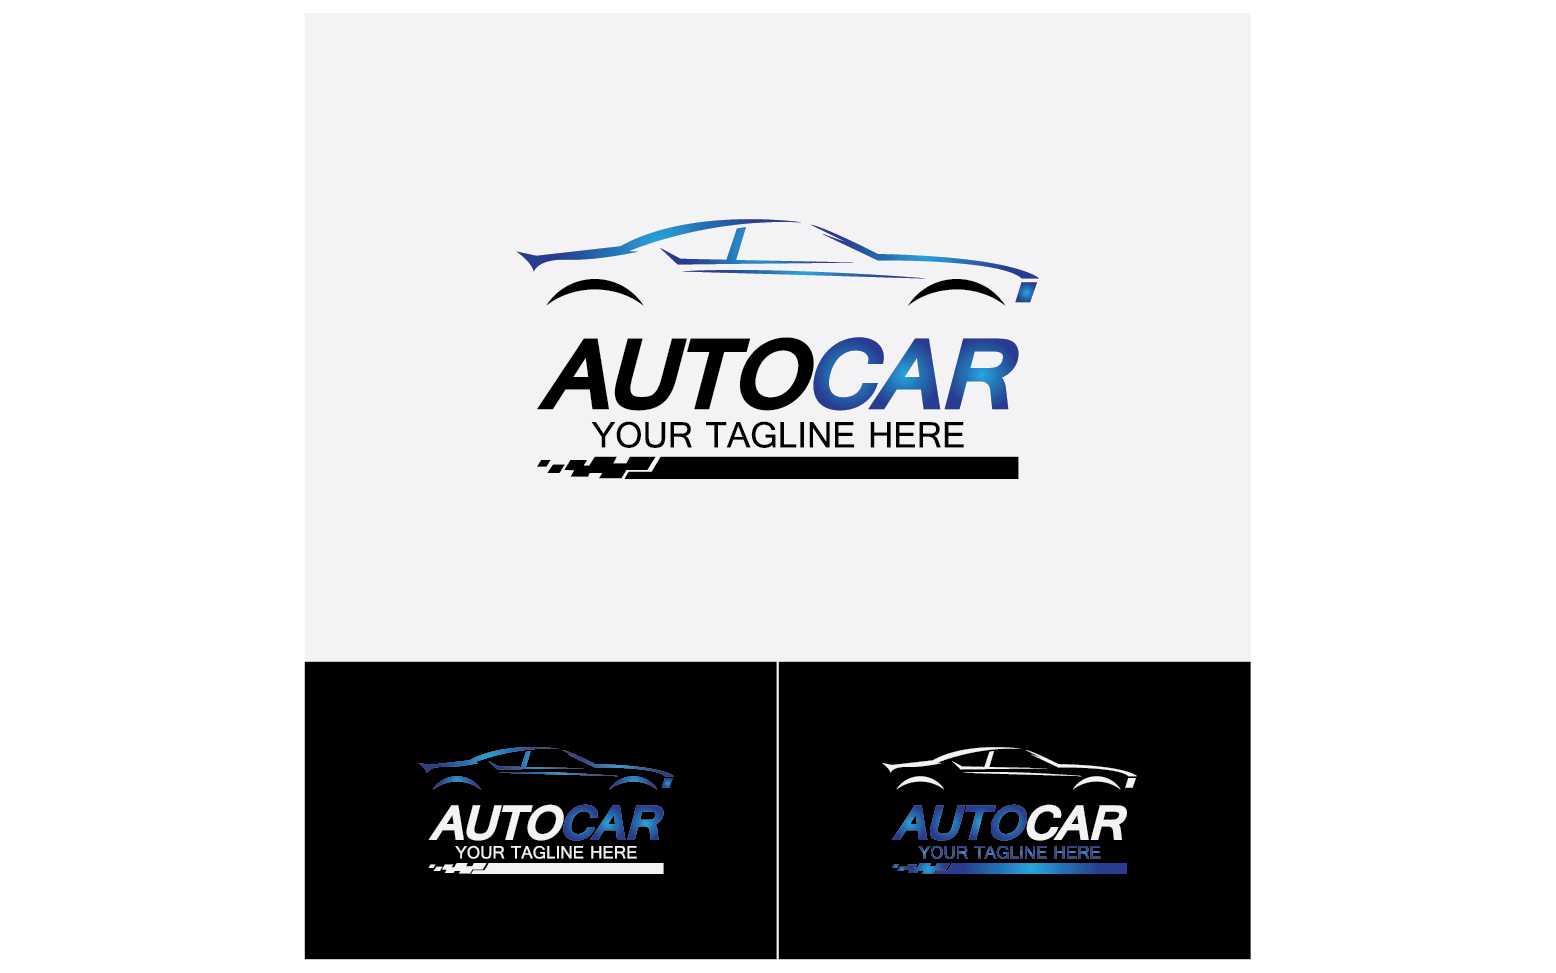 Cars dealer, automotive, autocar logo design inspiration. v38